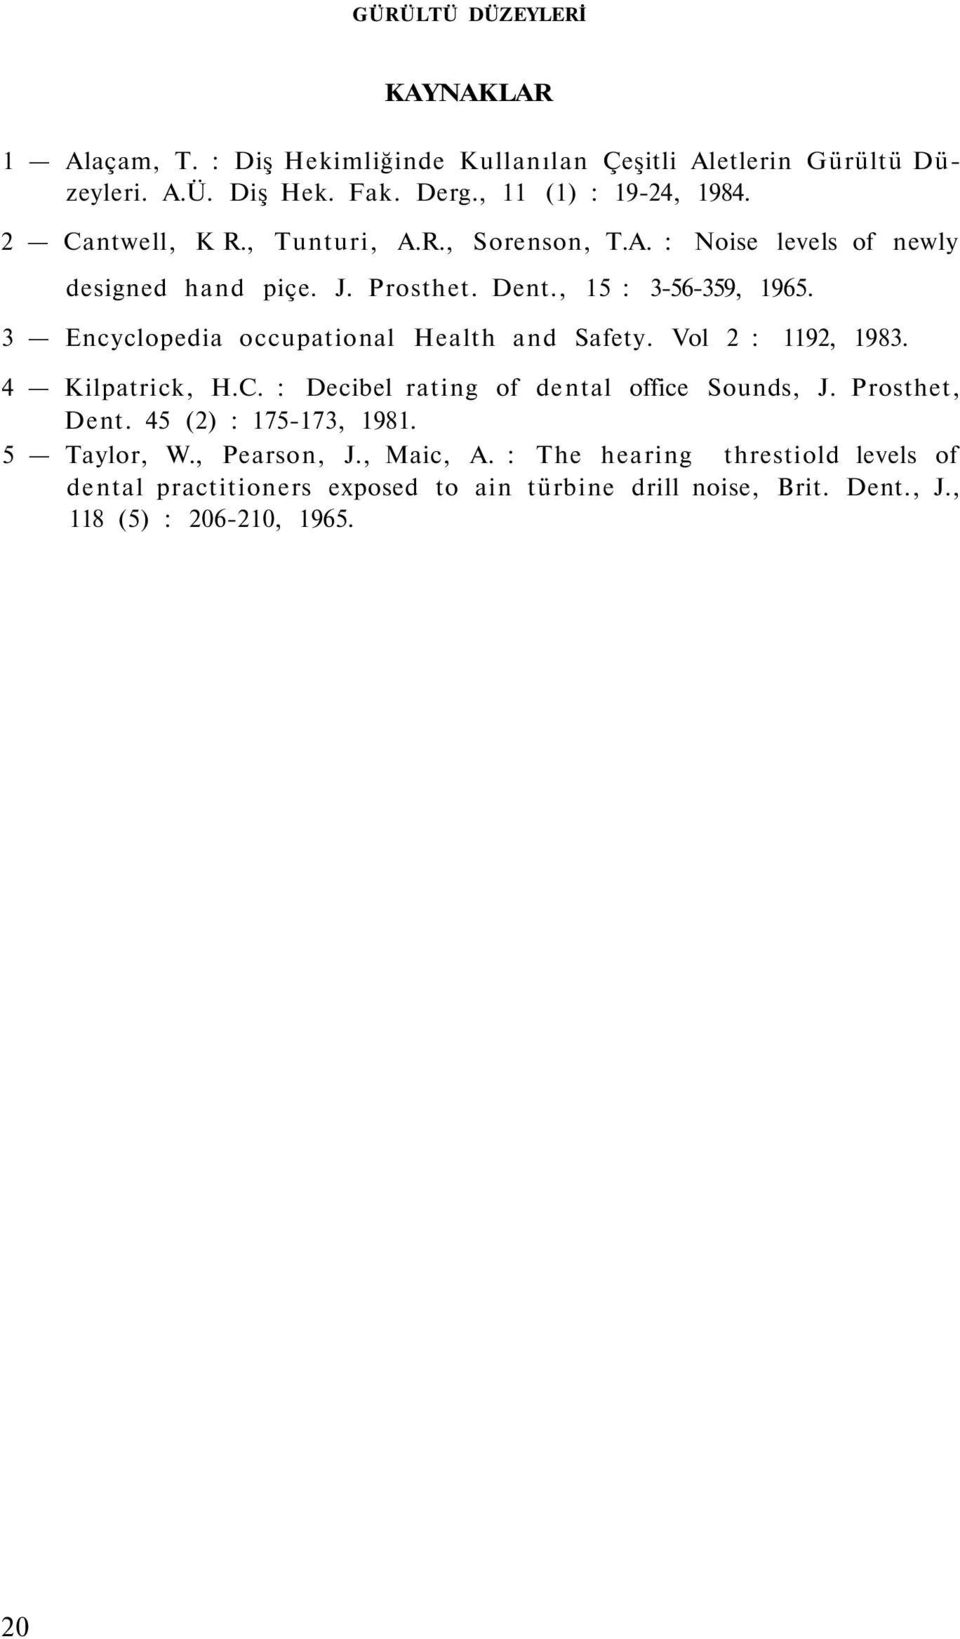 3 Encyclopedia occupational Health and Safety. Vol 2 : 1192, 1983. 4 Kilpatrick, H.C. : Decibel rating of dental office Sounds, J. Prosthet, Dent.